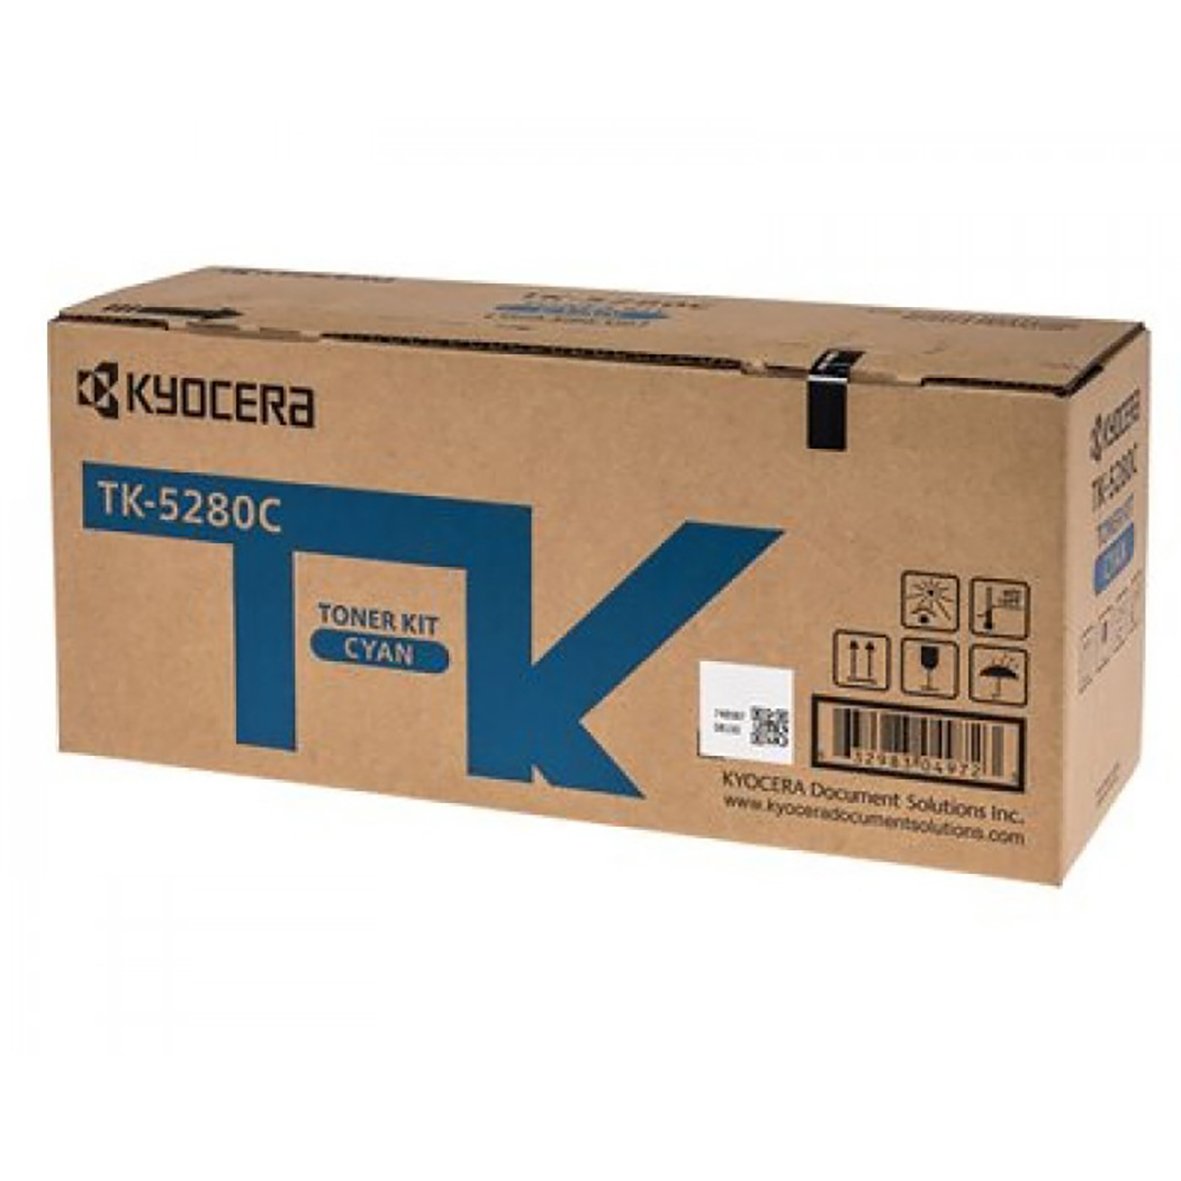 Toner Kit Kyocera 11000sid TK-5280C Cyan 32110350